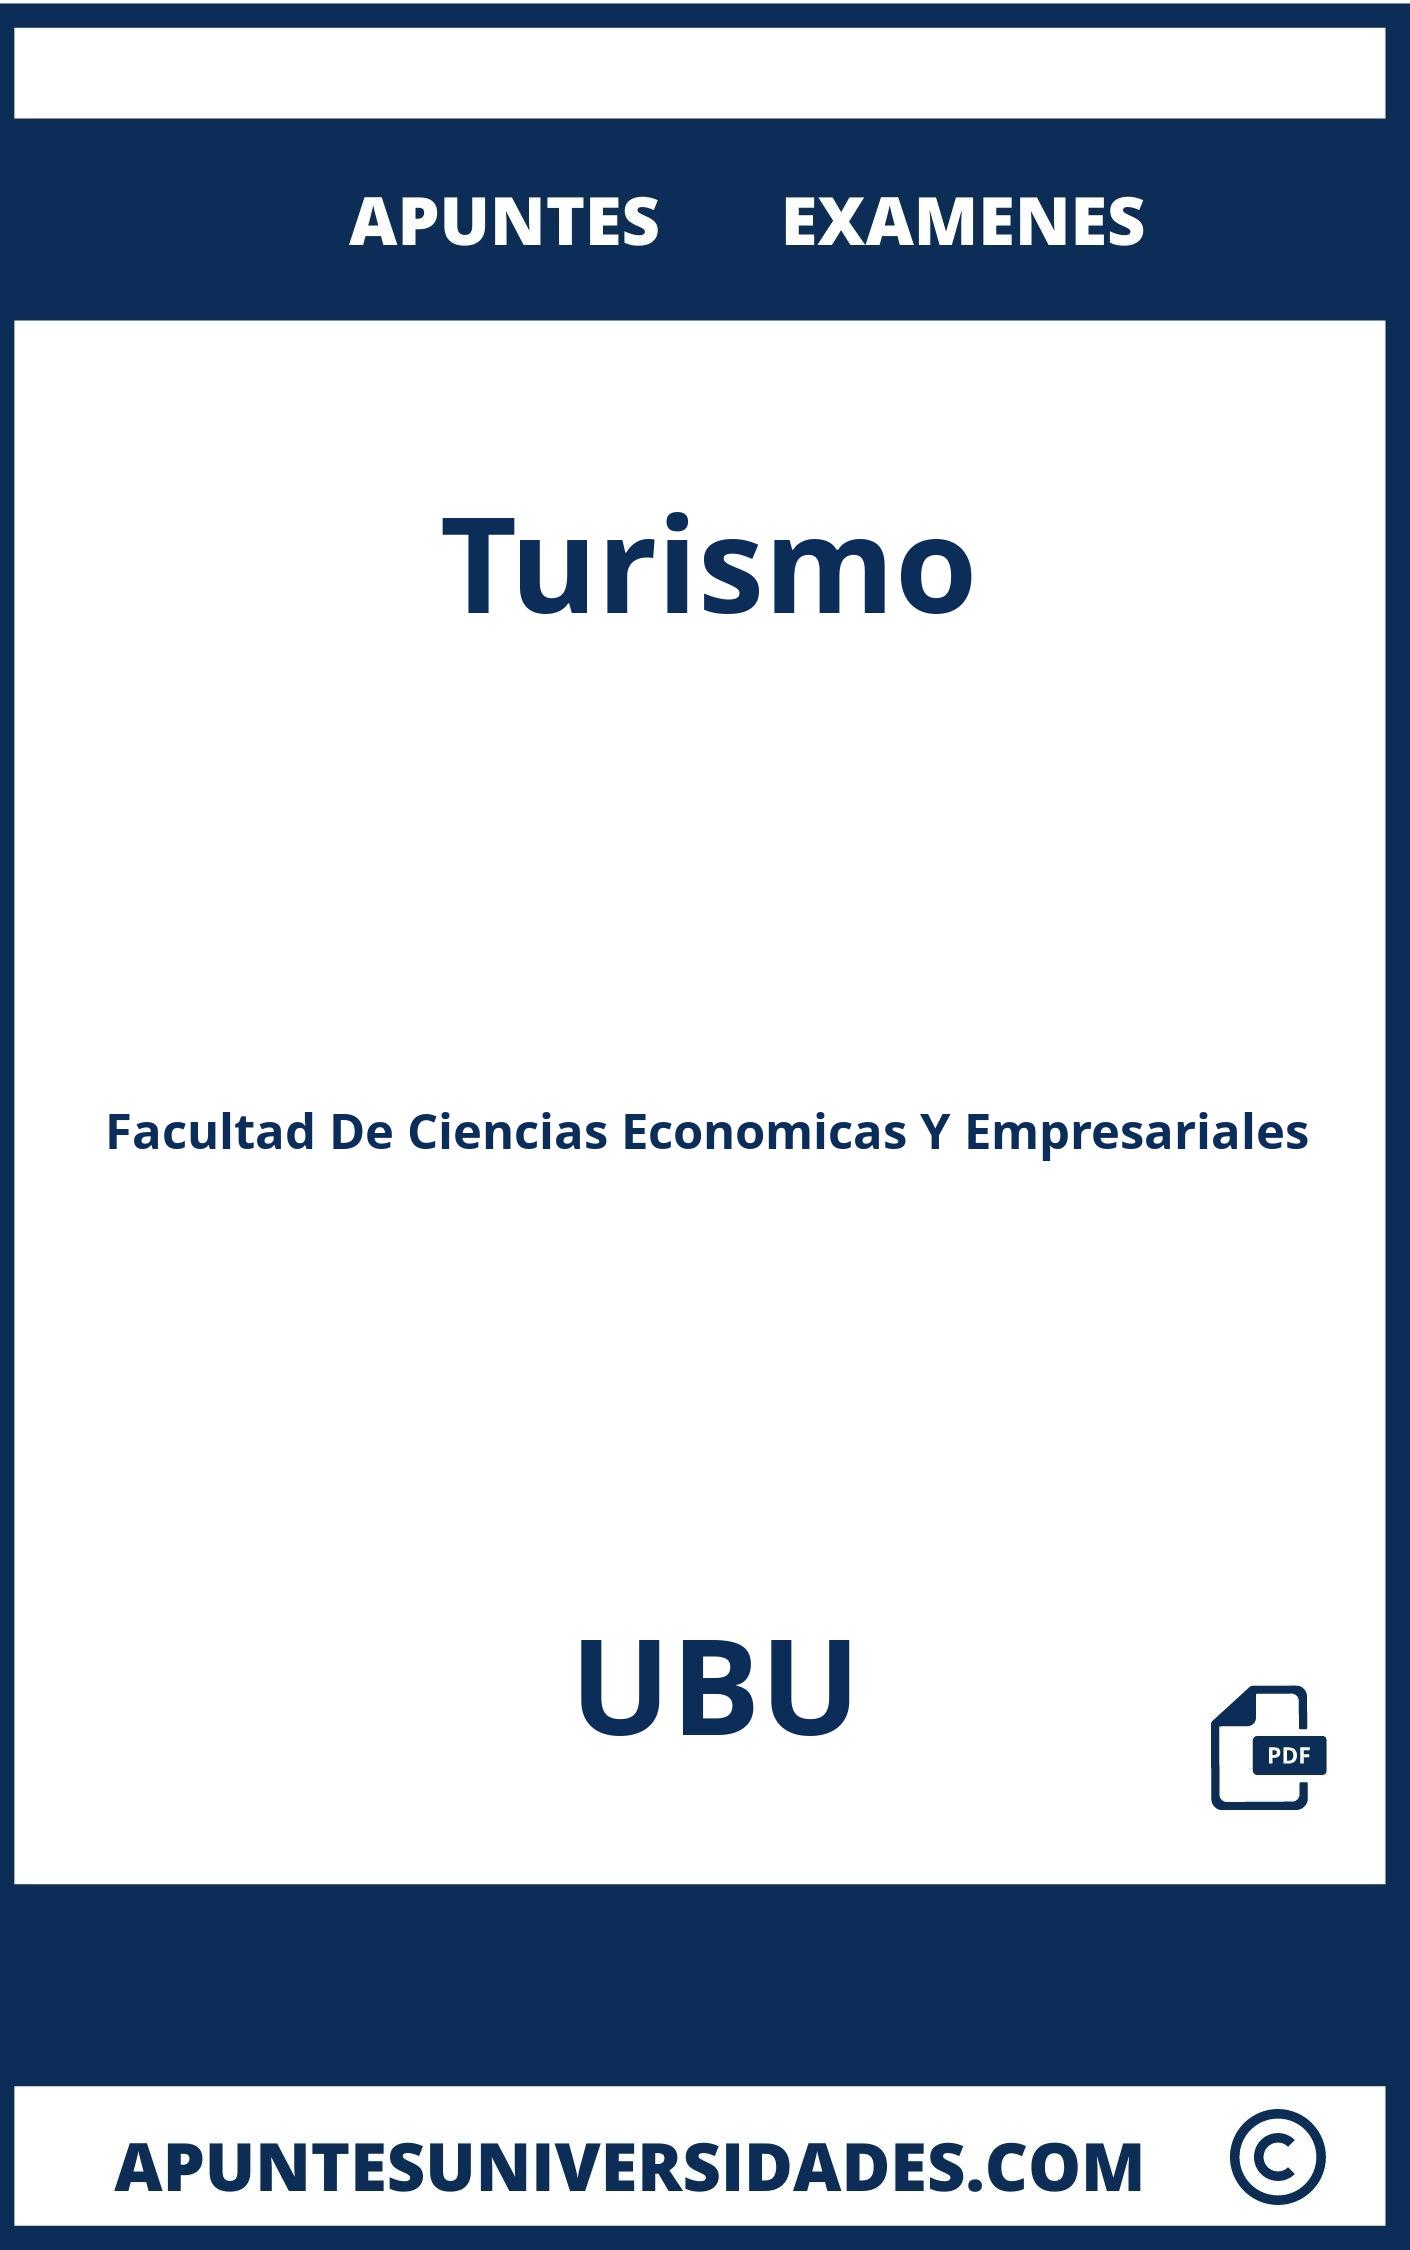 Turismo UBU Examenes Apuntes